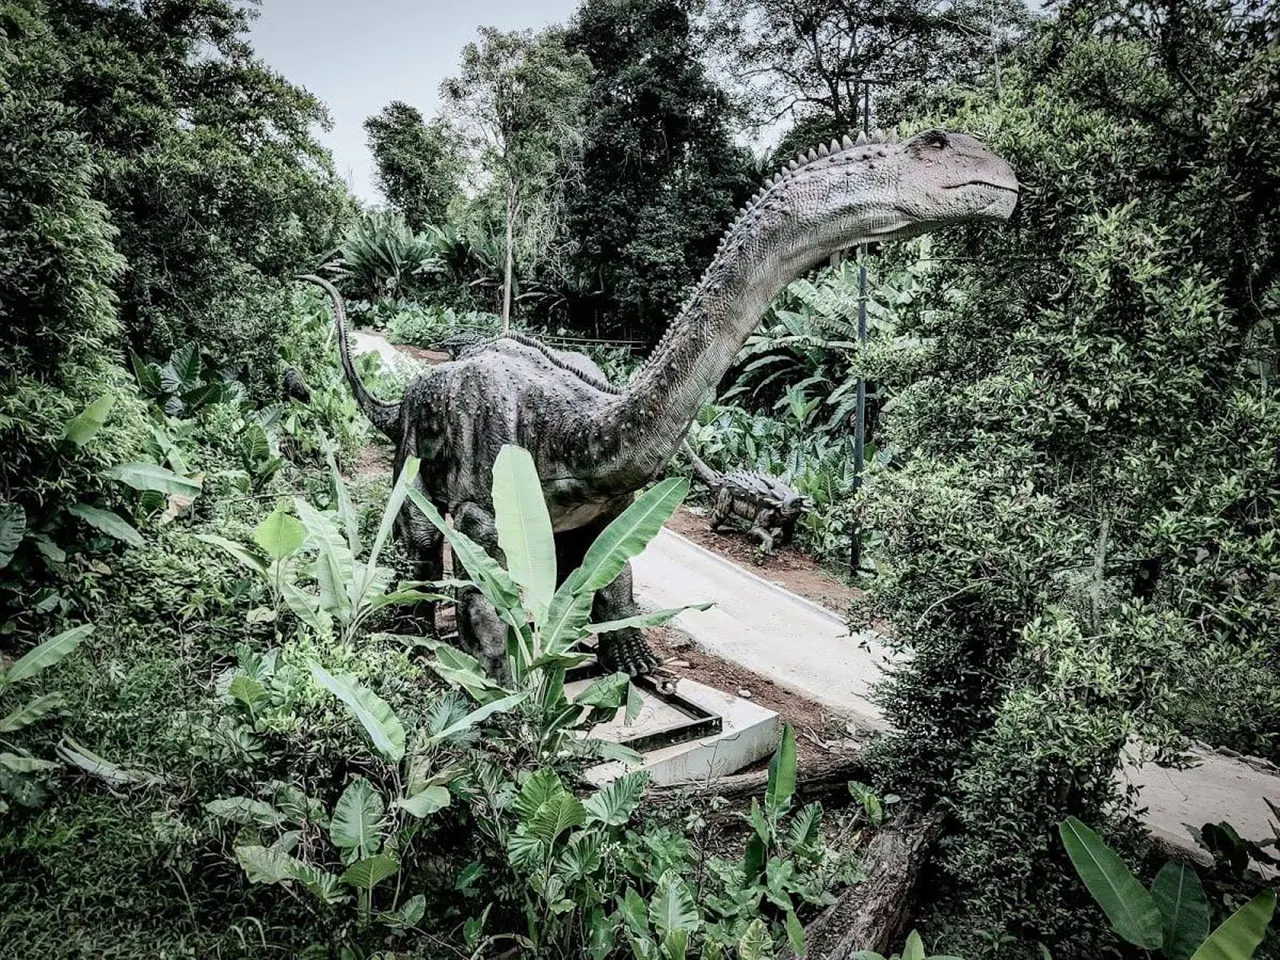 Dinosaur Encounter Melaka